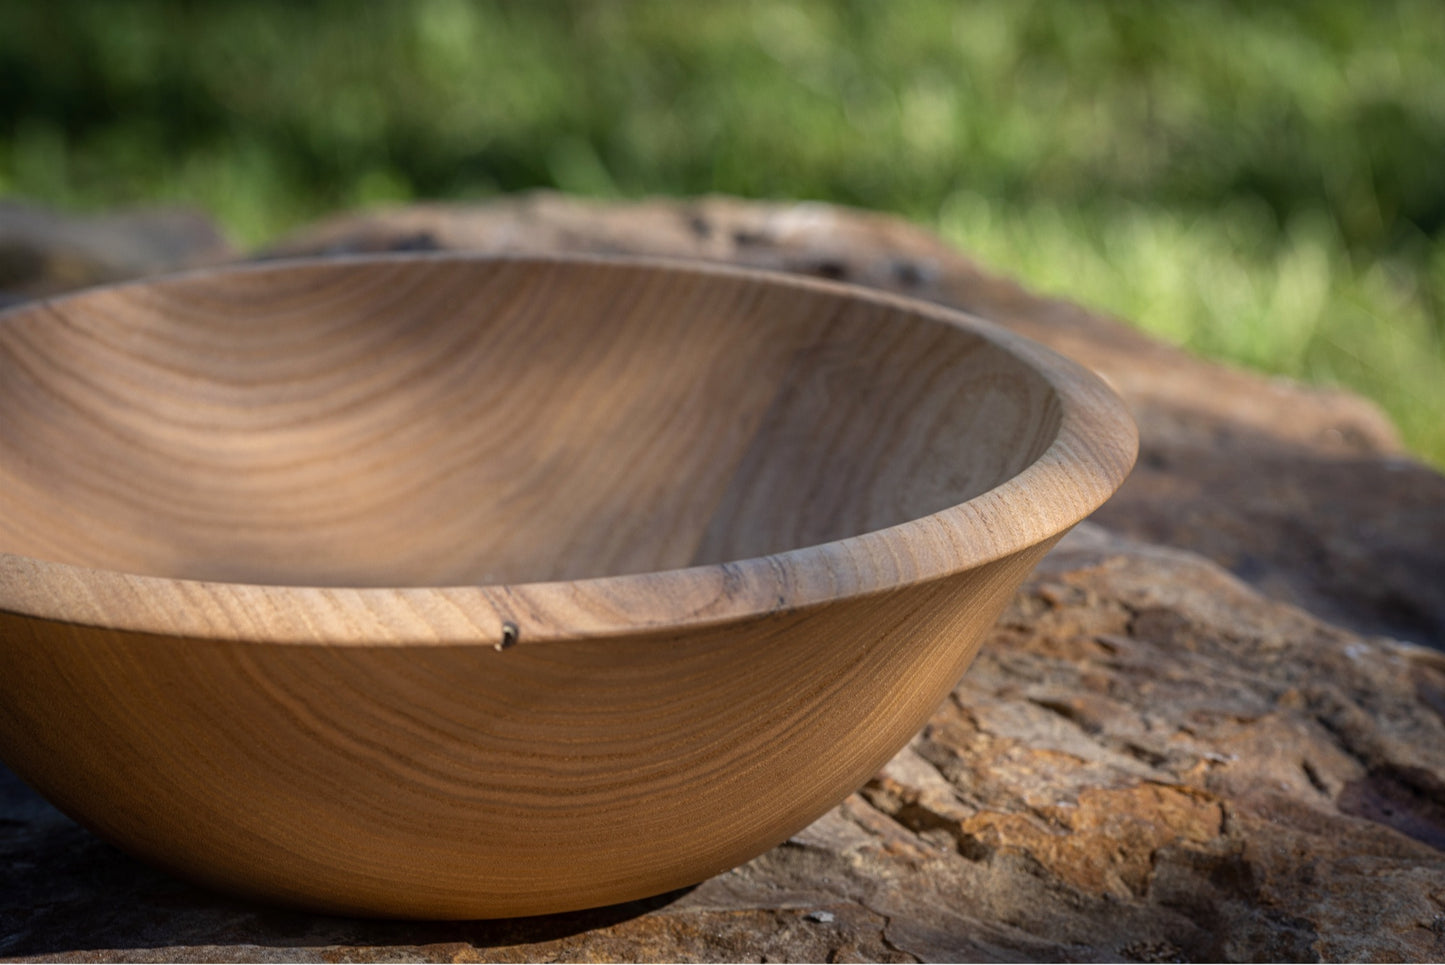 Sassafras - Medium (11-1/2 inch) Bowl